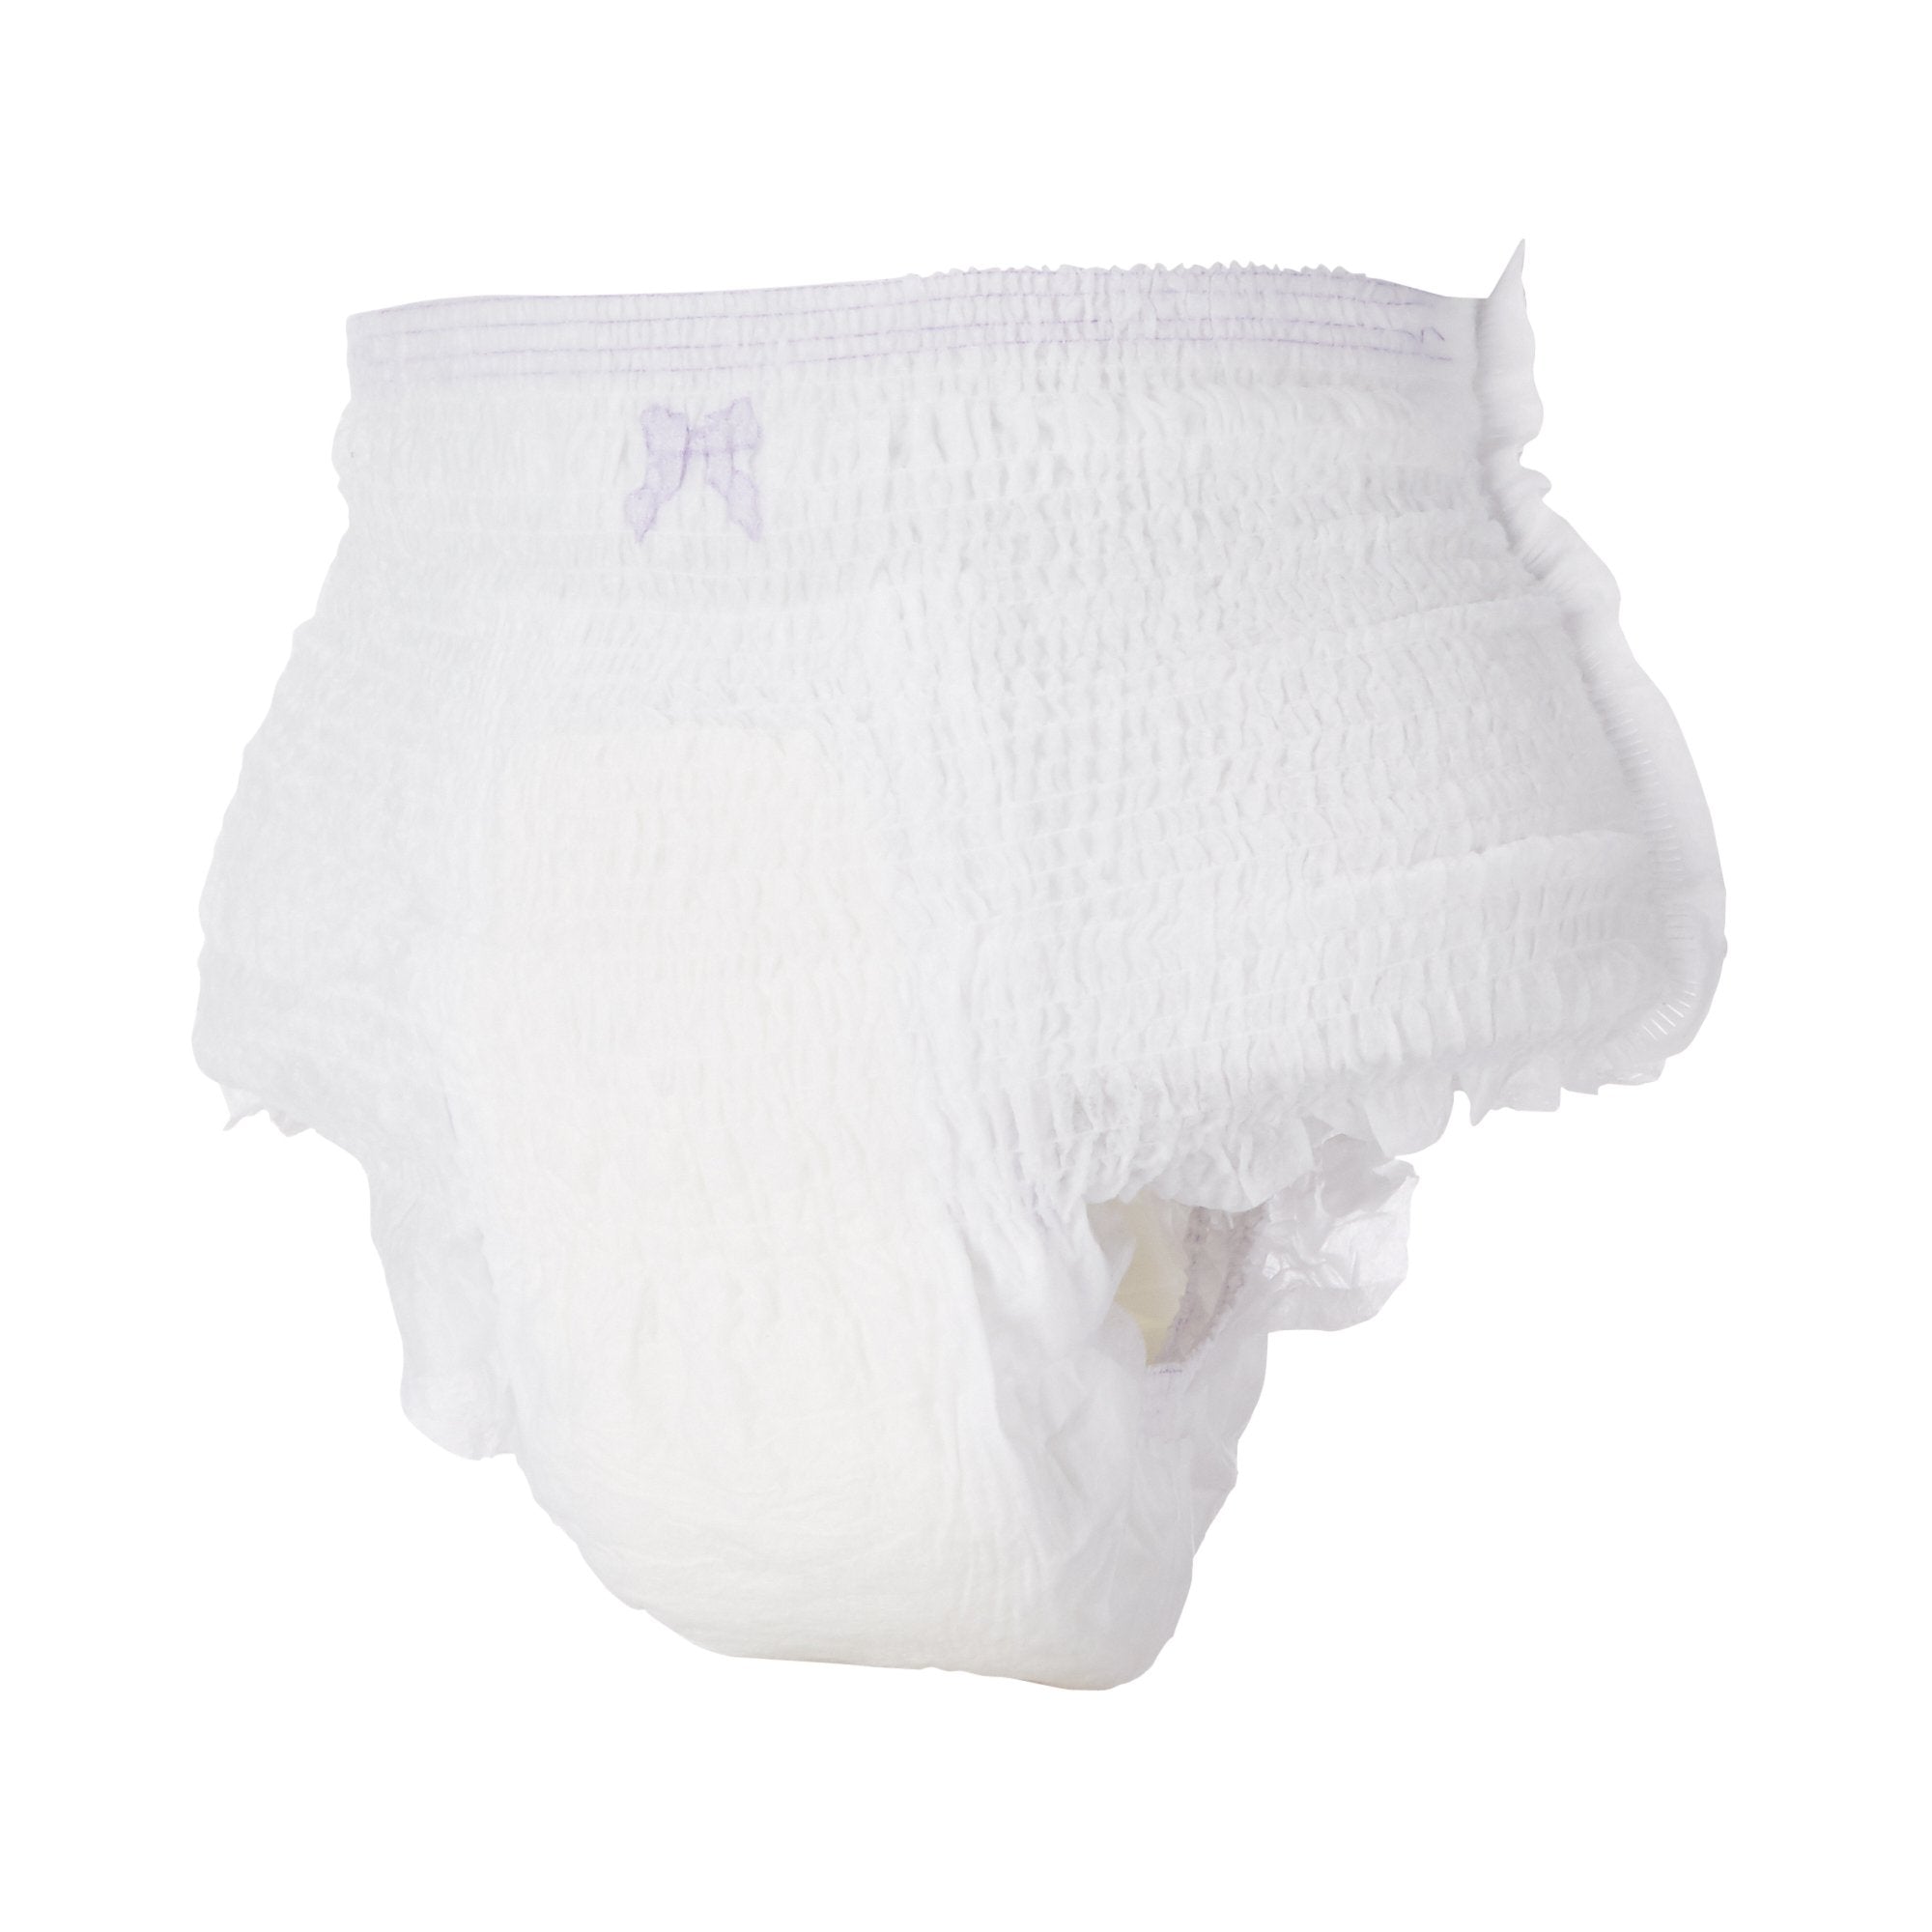 Always® Discreet Maximum Absorbent Underwear, Small / Medium (57 Units)